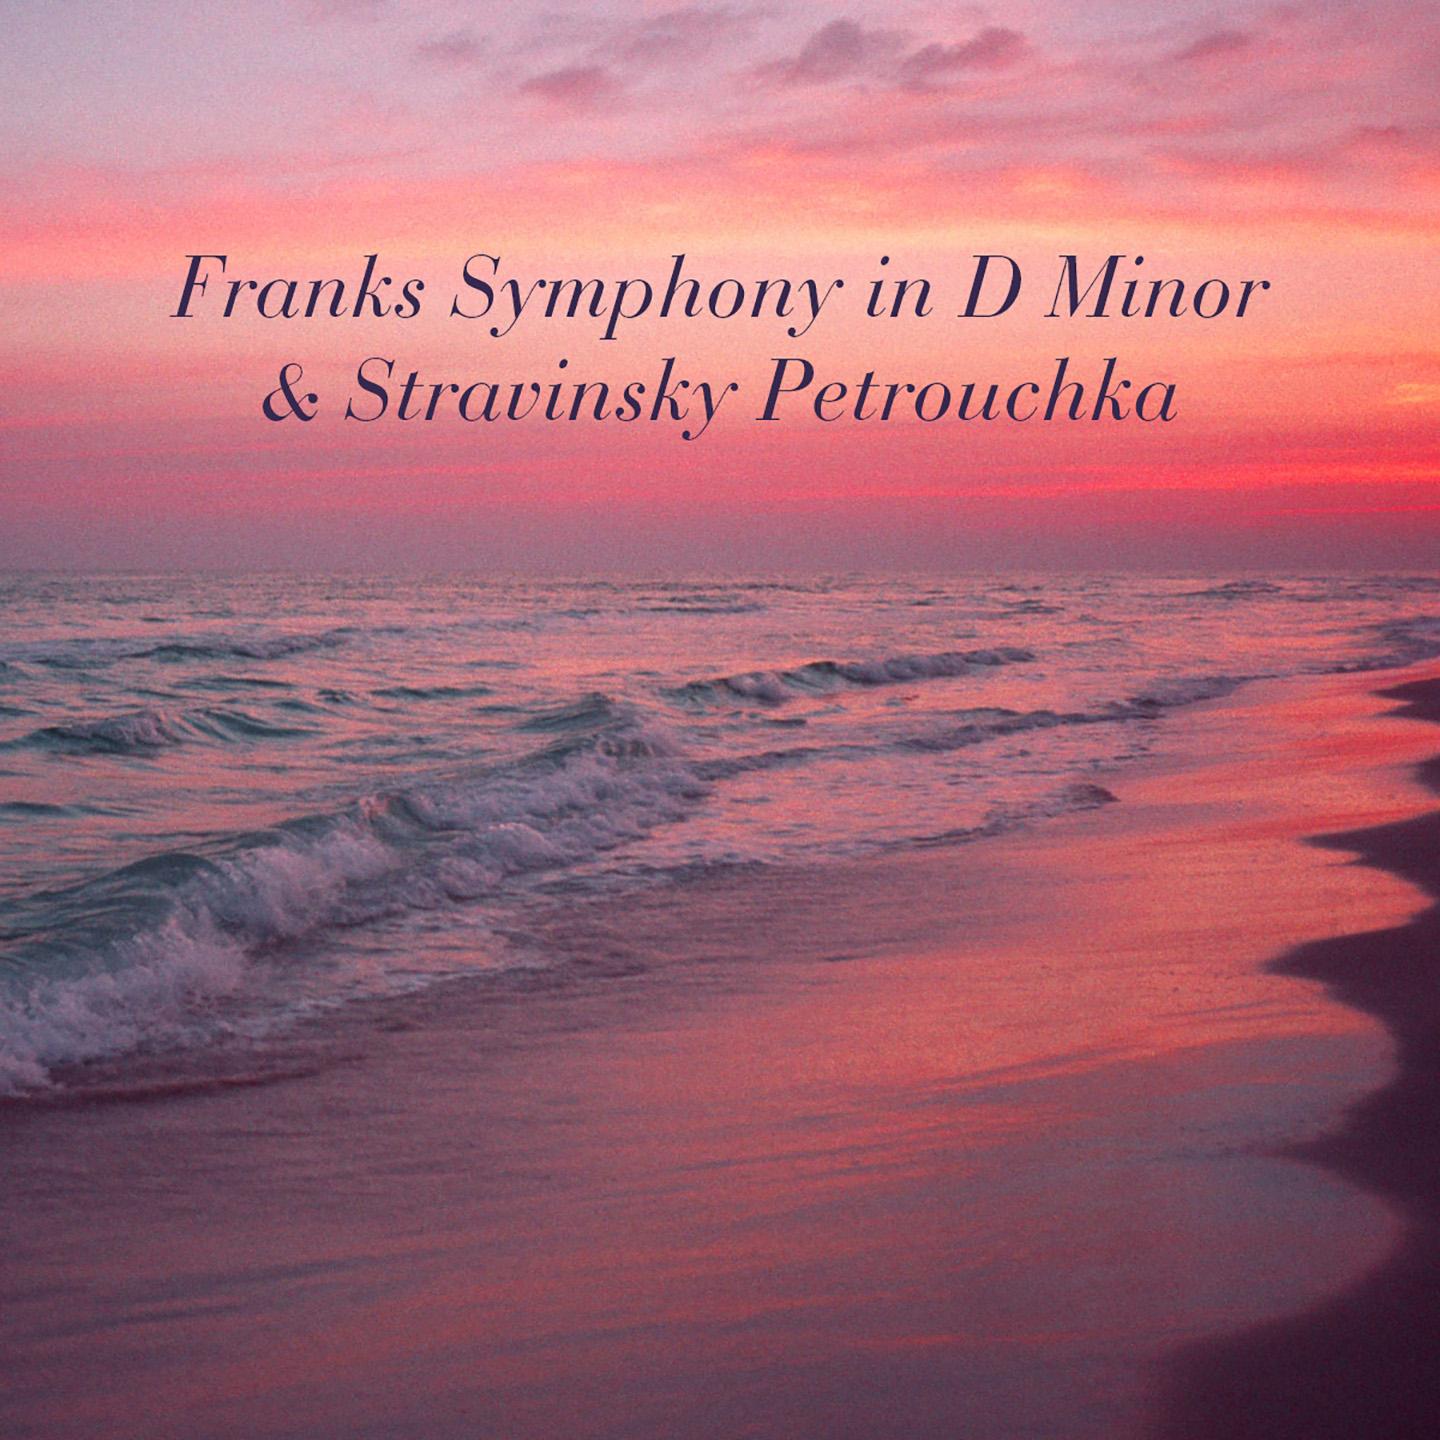 Franks Symphony in D Minor & Stravinsky Petrouchka